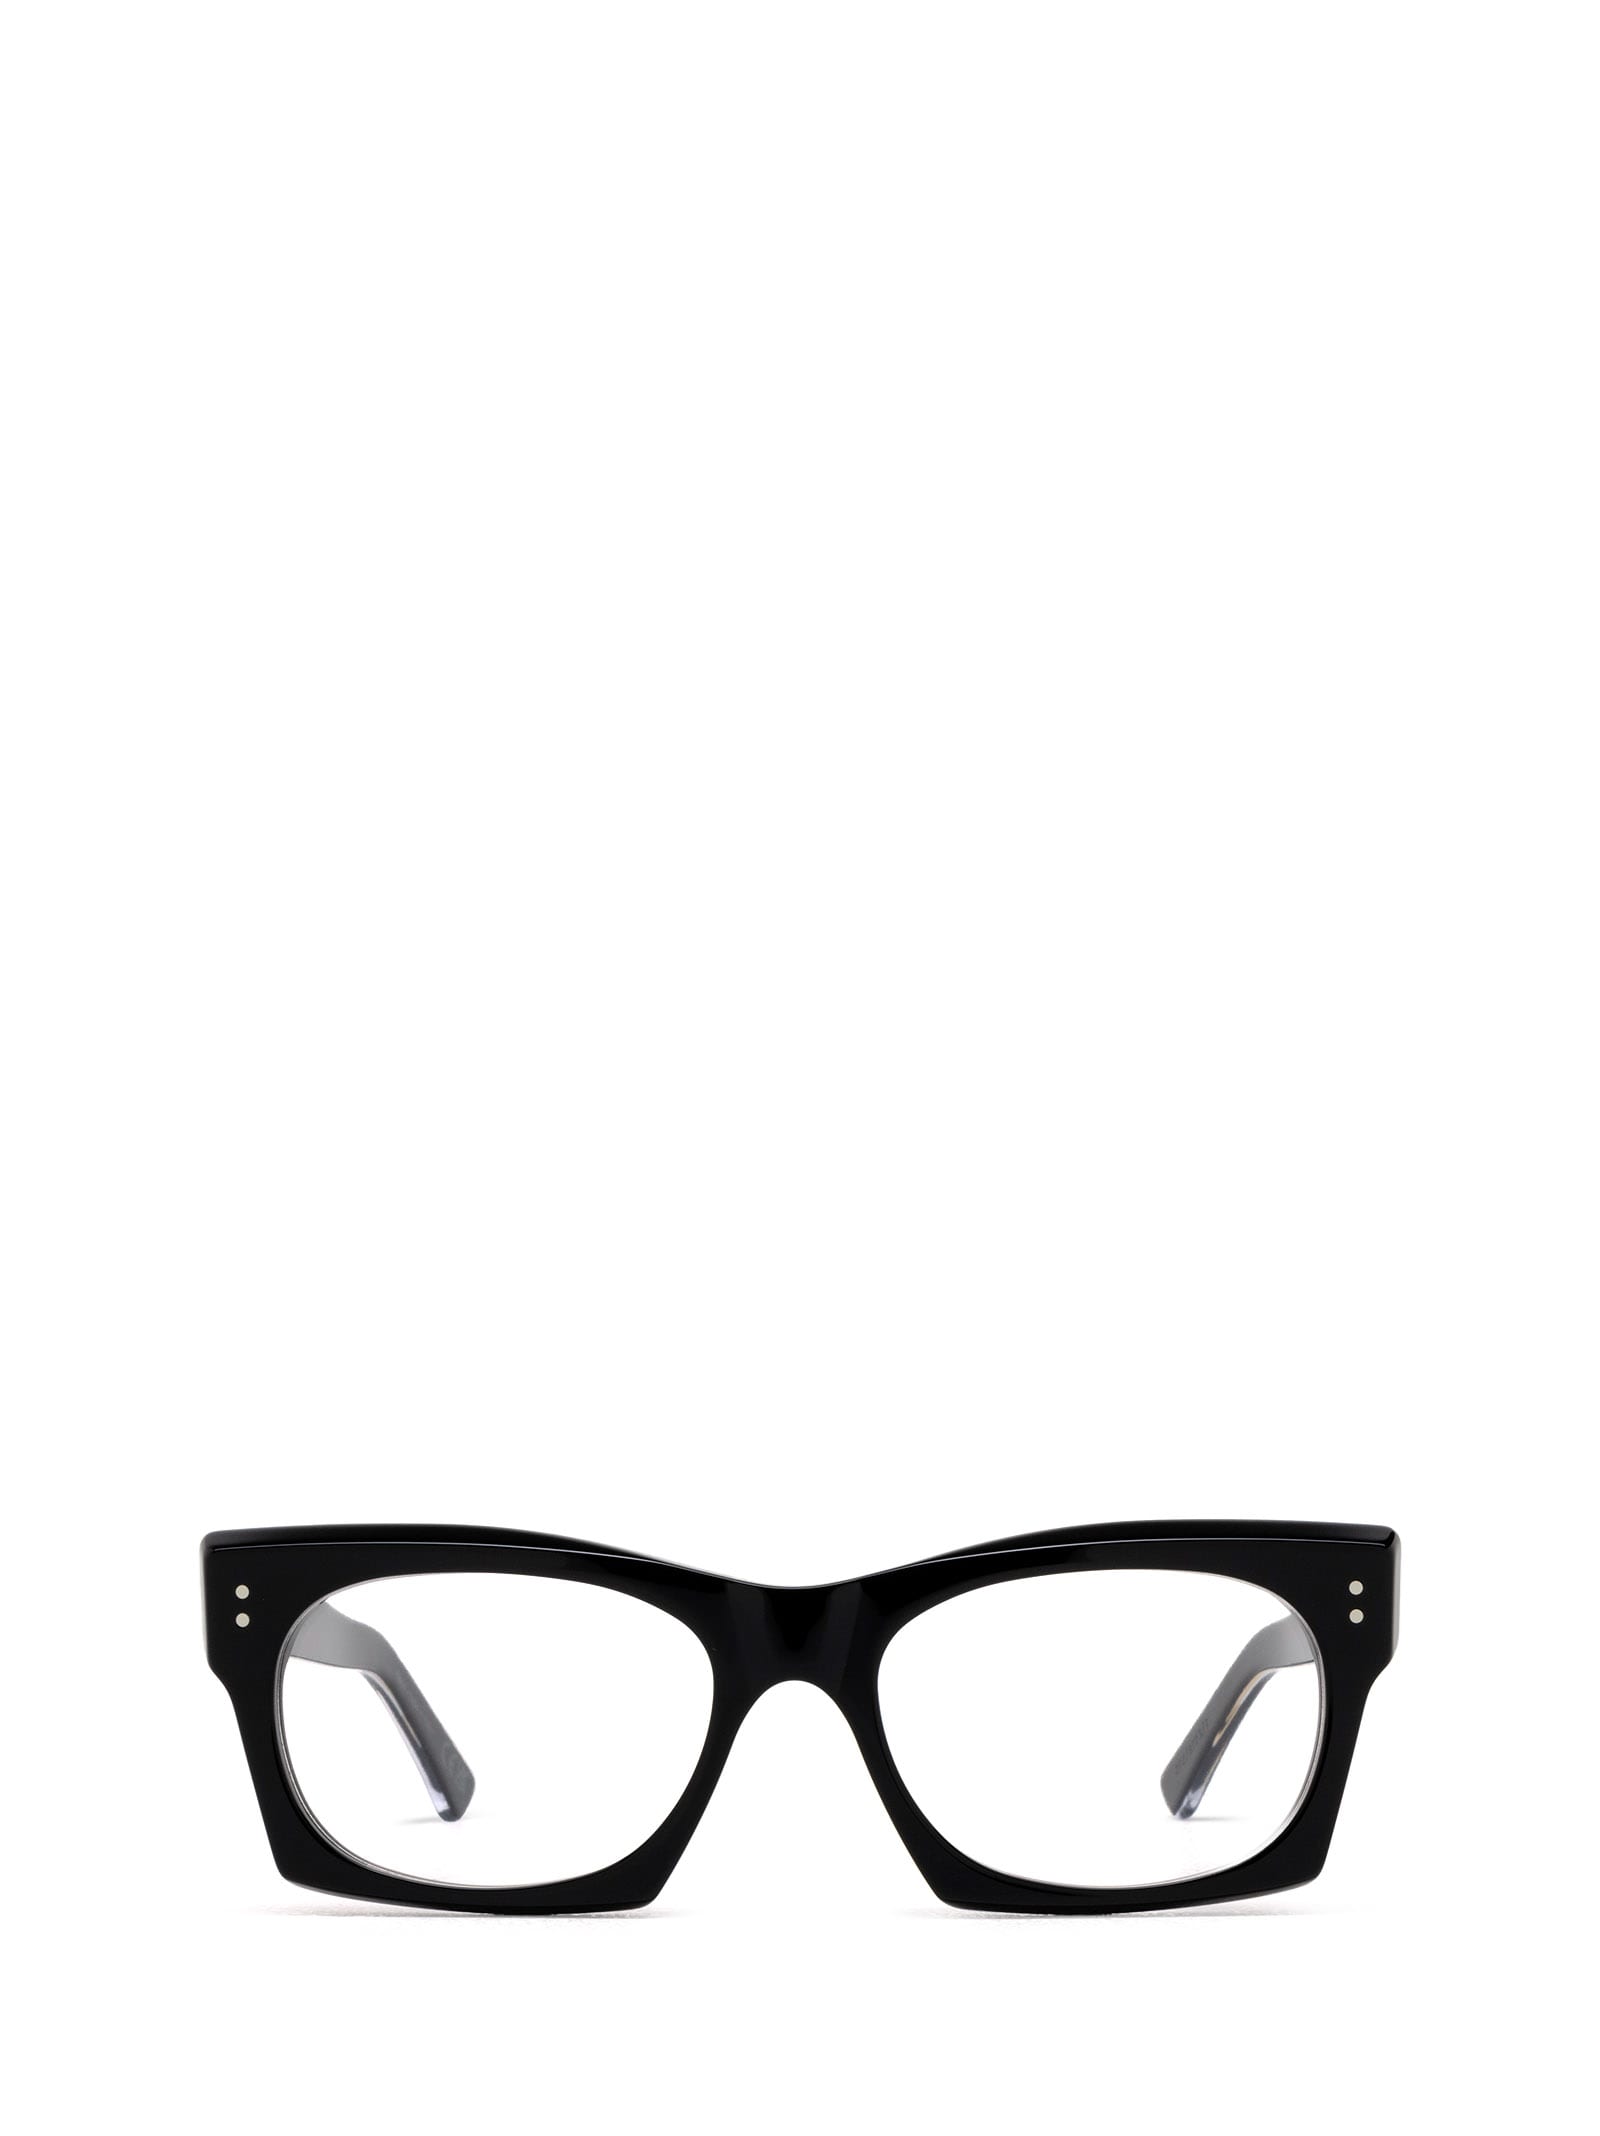 Edku Optical Black Glasses